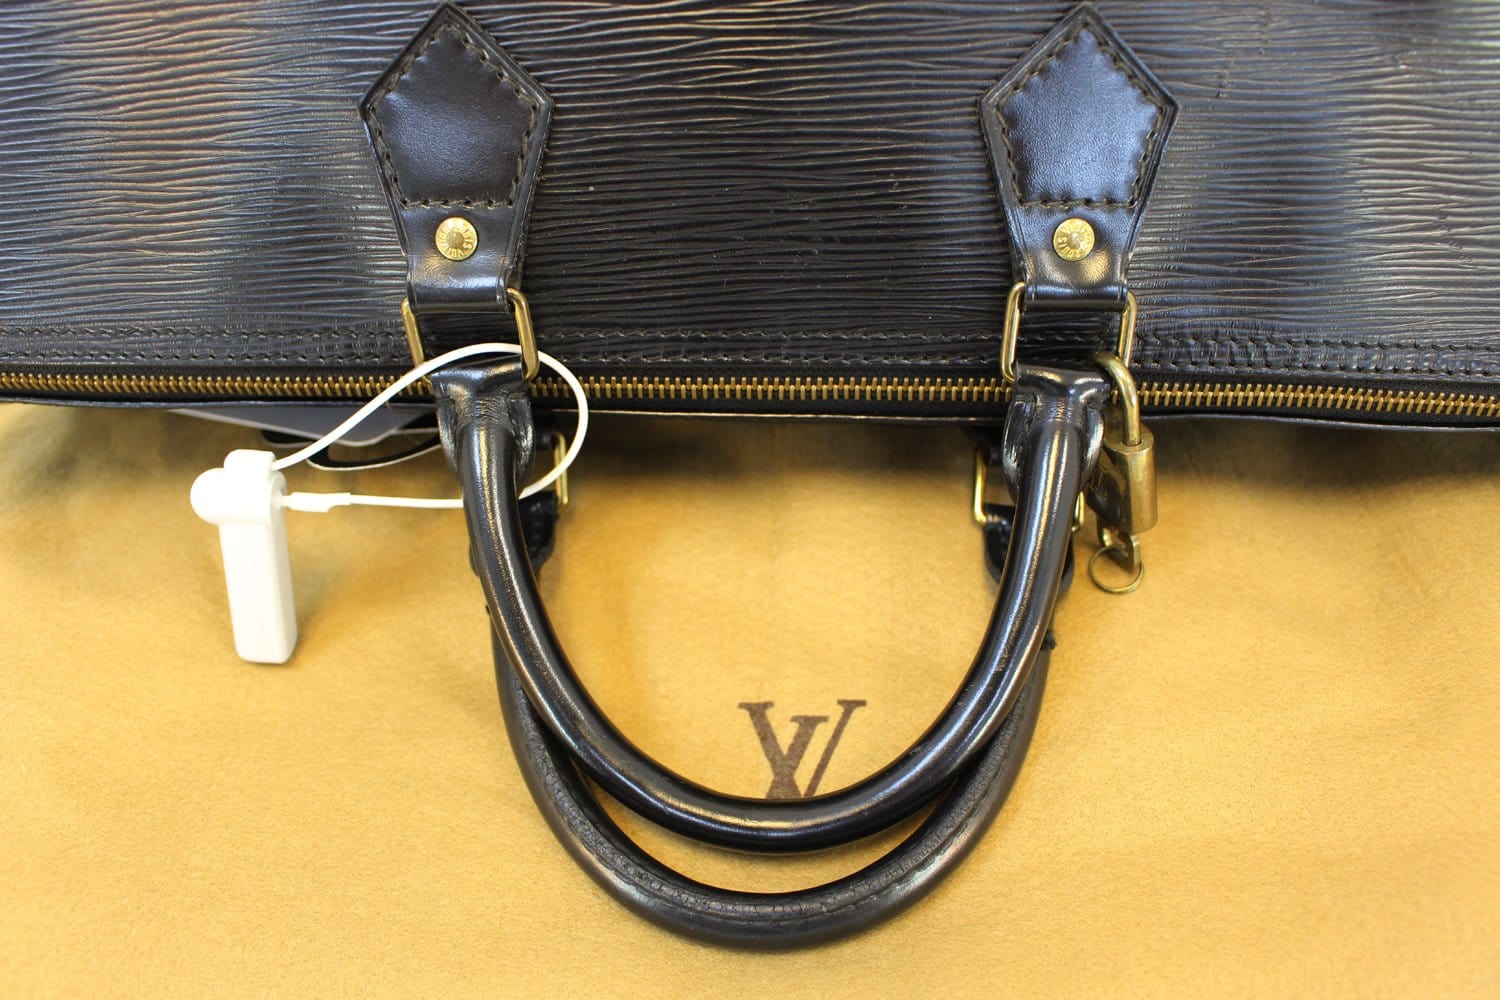 LOUIS VUITTON Epi Leather Speedy 40 Black Satchel Bag